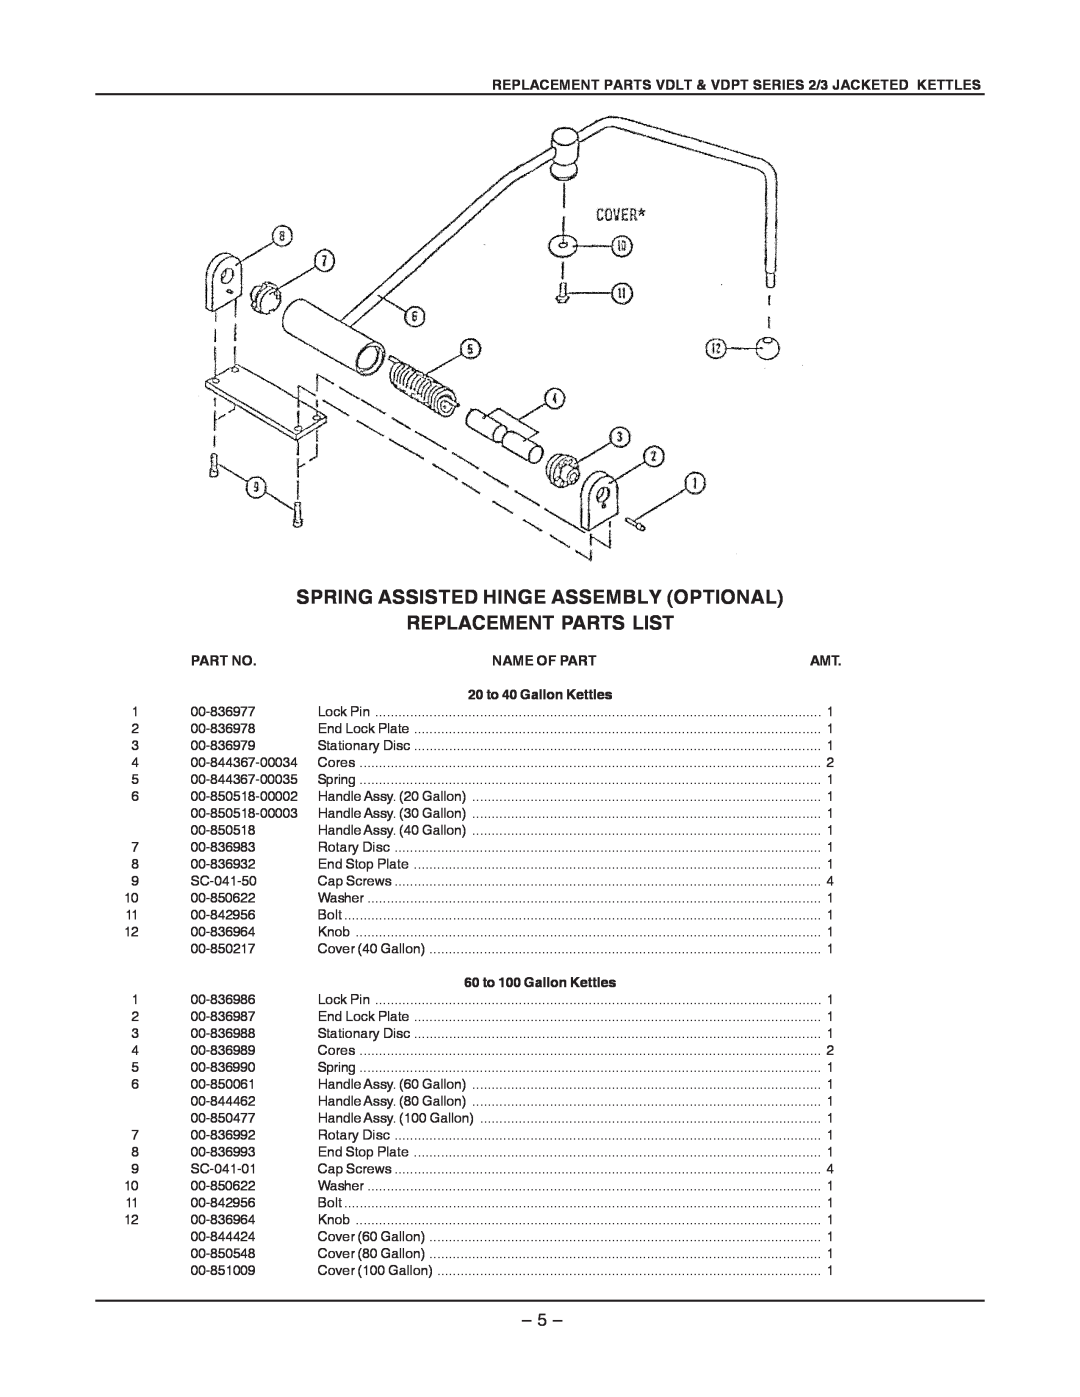 Vulcan-Hart VDLT60, ML-103416, ML-103418, ML-103417, VDLT80 Spring Assisted Hinge Assembly Optional, Replacement Parts List 